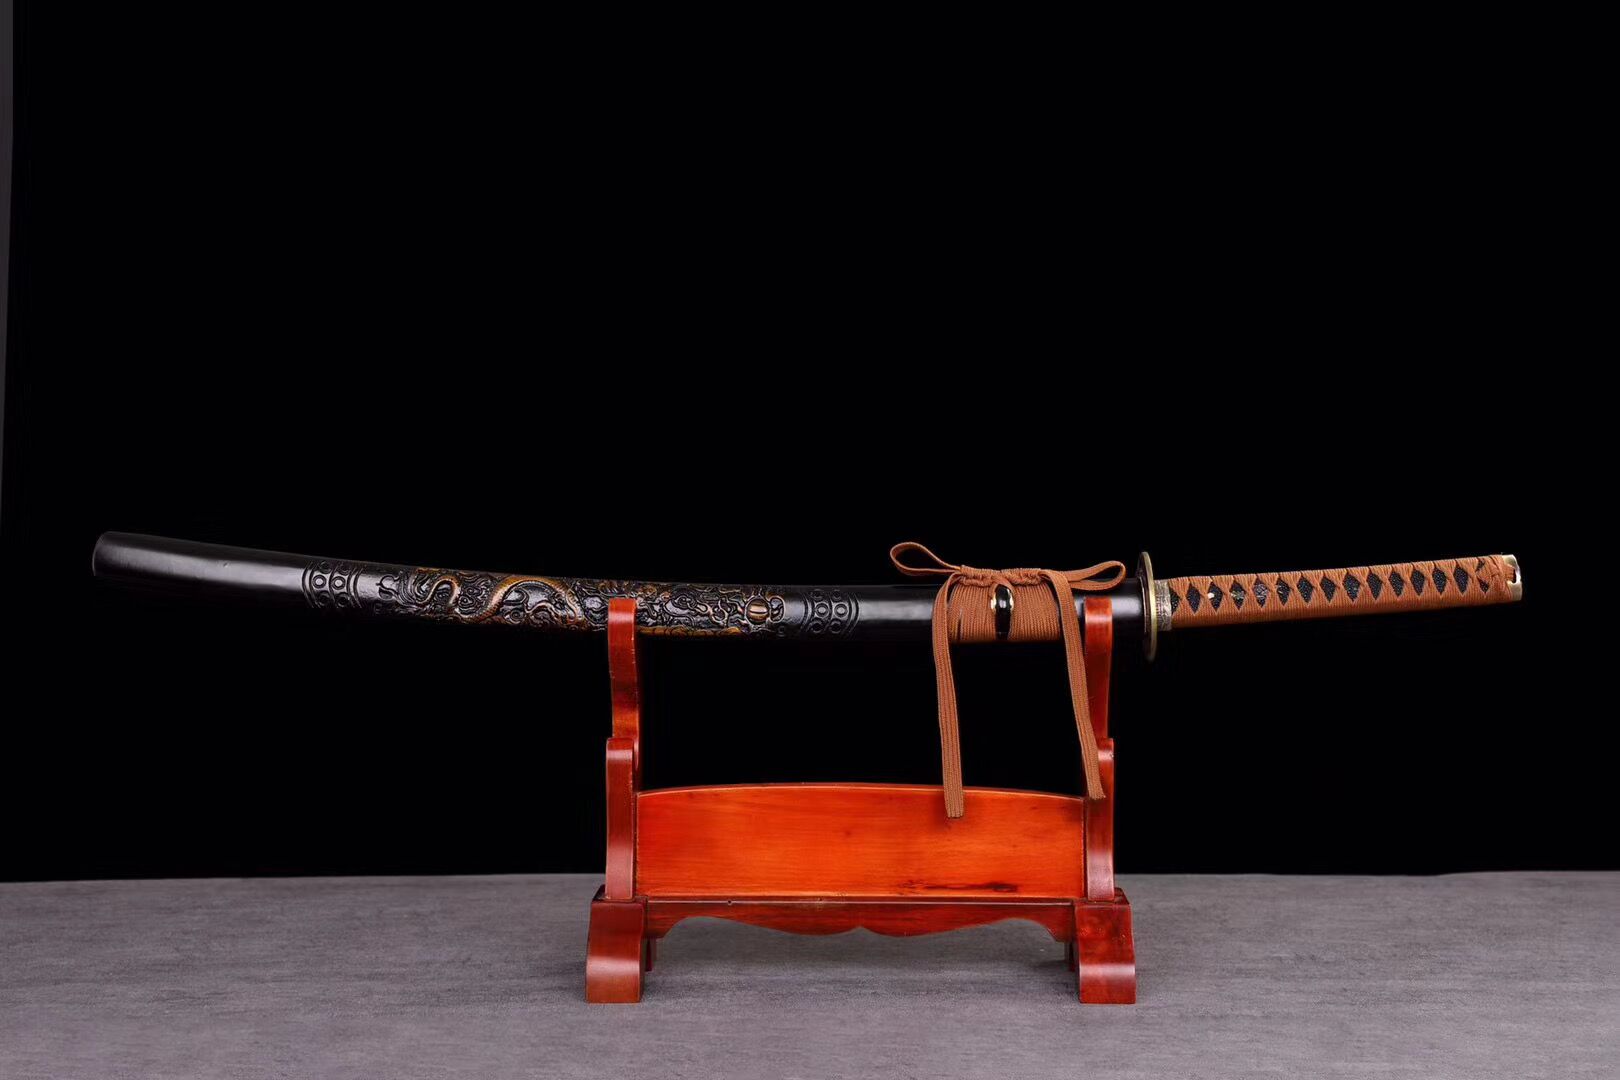 Dragon phoenix samurai sword,Katana,High-performance spring steel,Solid wood handmade Scabbard,Longquan sword